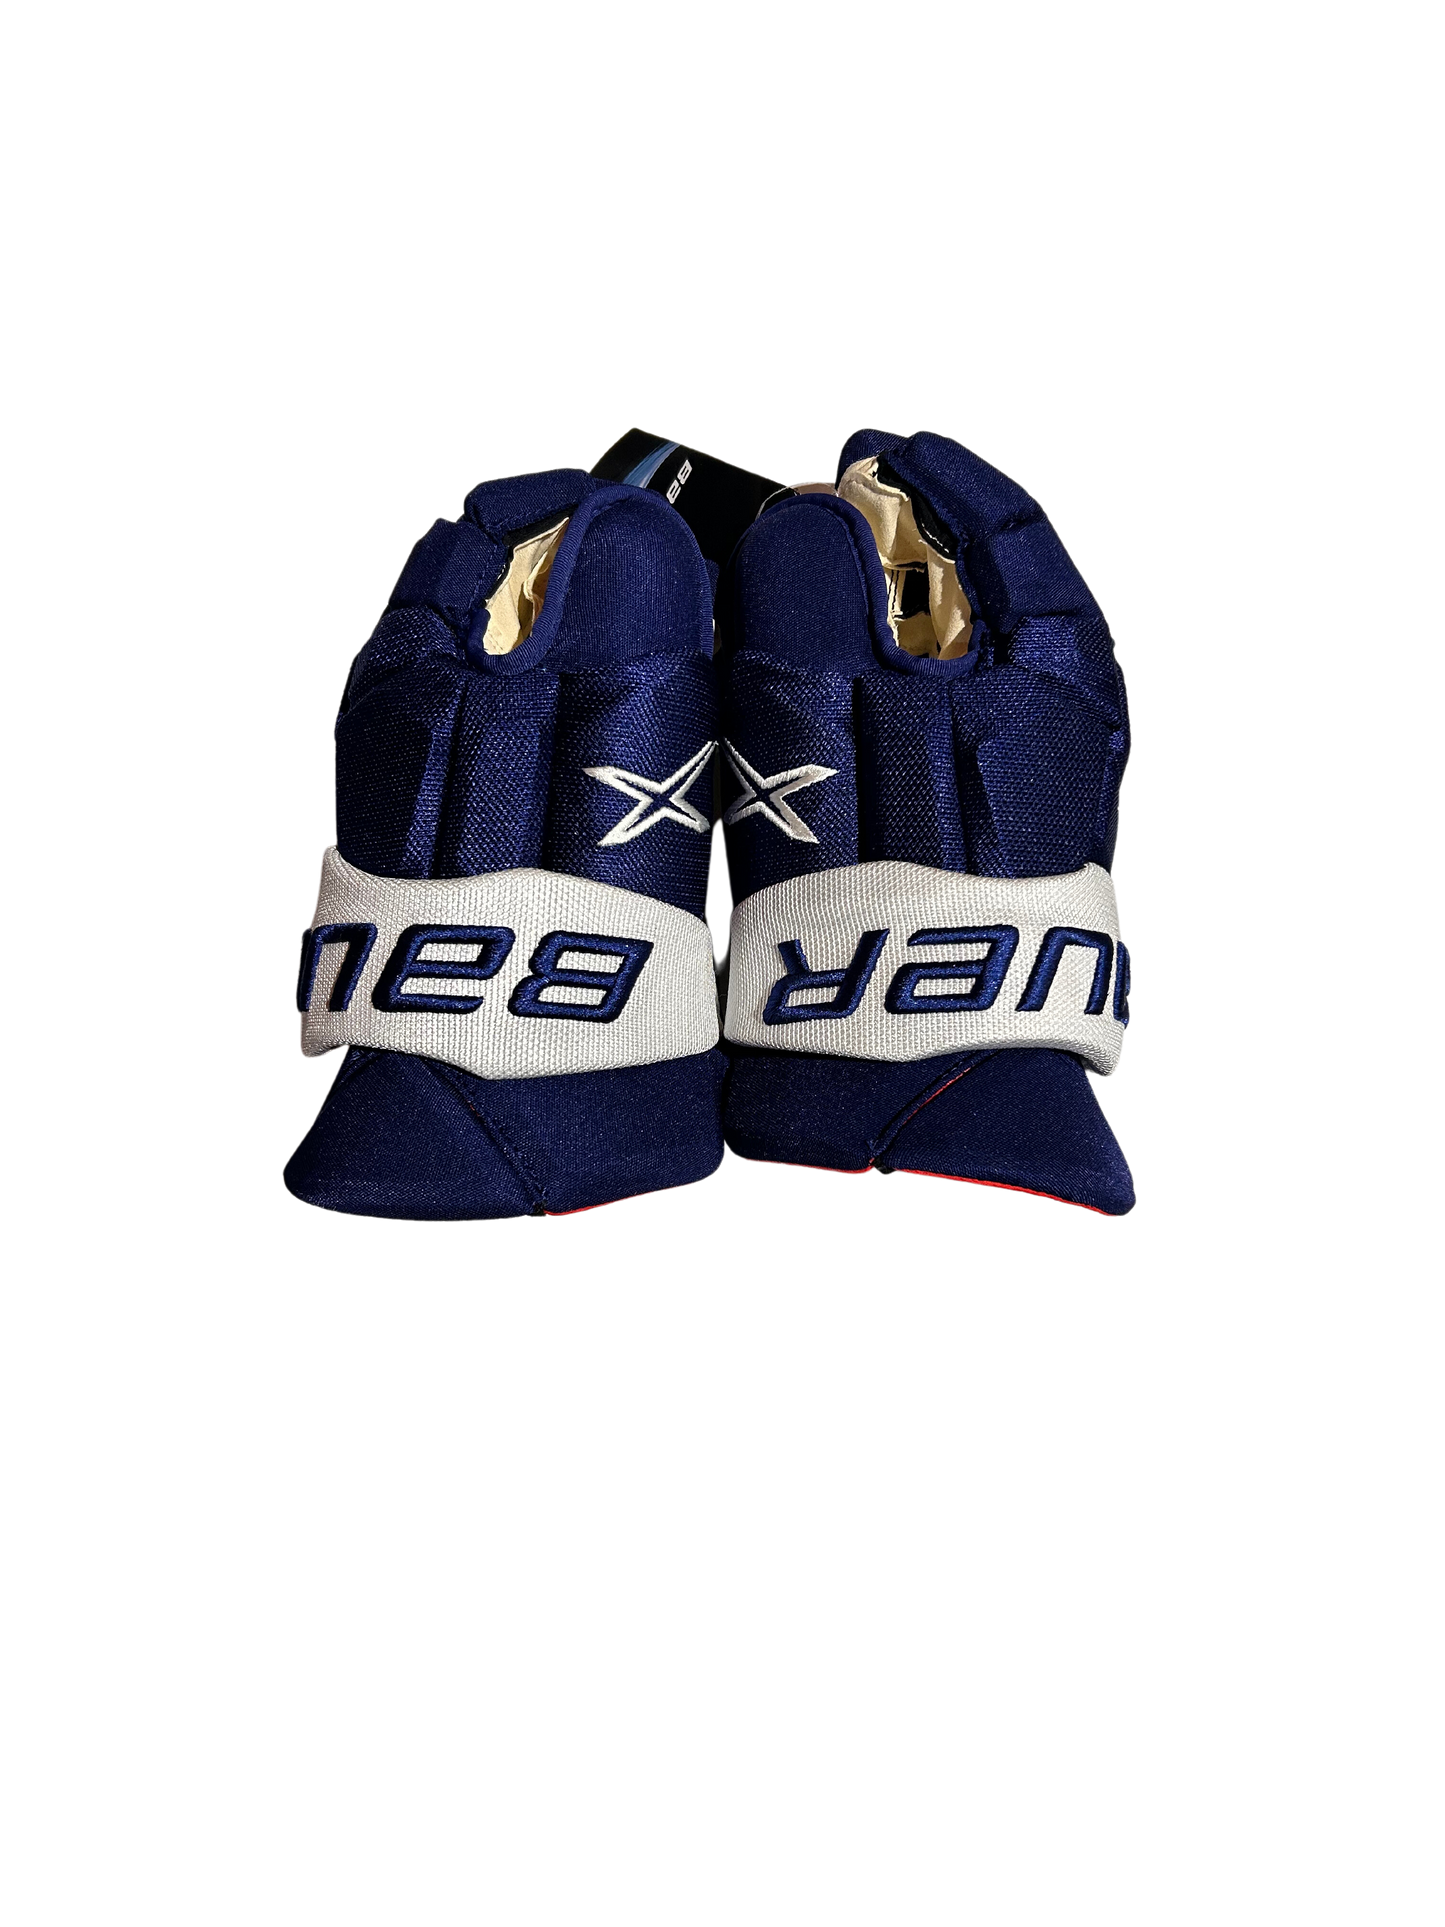 New Lehtonen Toronto Maple Leafs 14" Bauer Vapor X Gloves